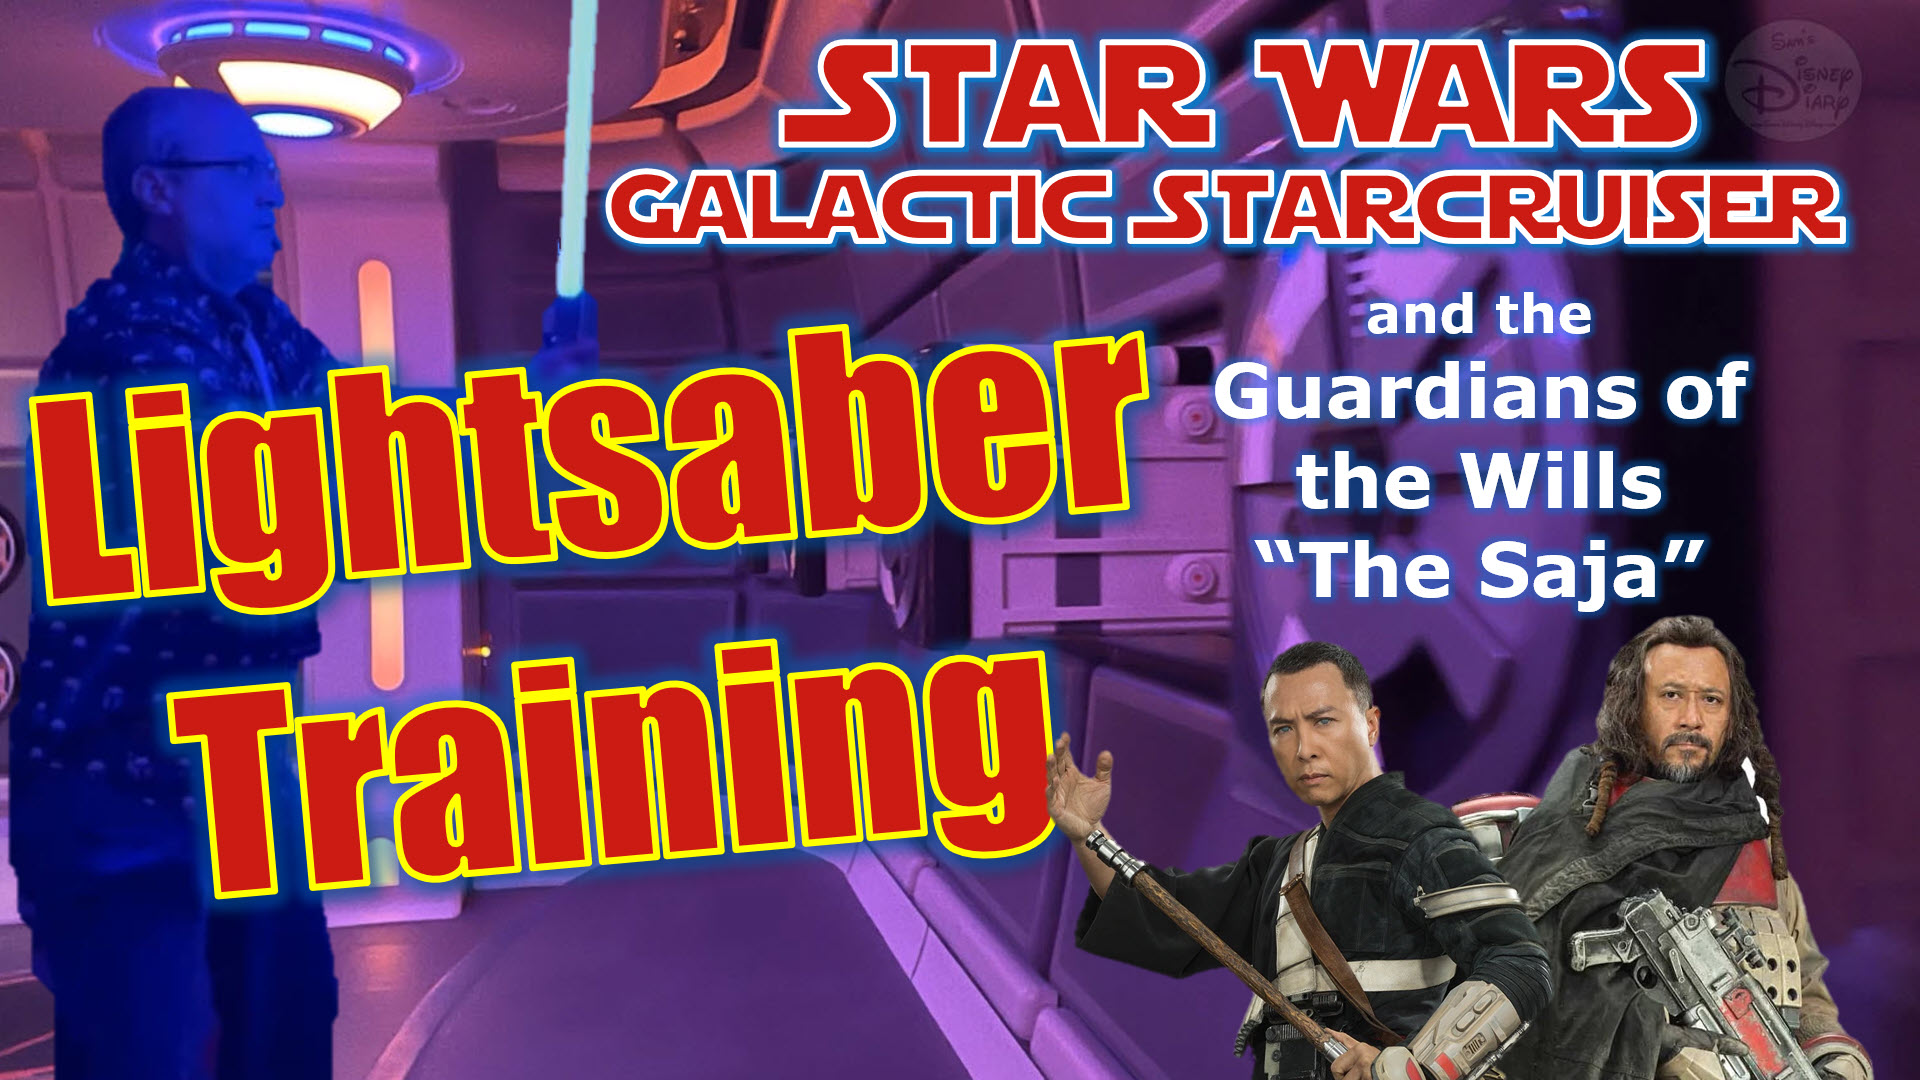 Star Wars Galactic Starcruiser | Lightsaber Training | The Saja | The Backstory | Walt Disney World